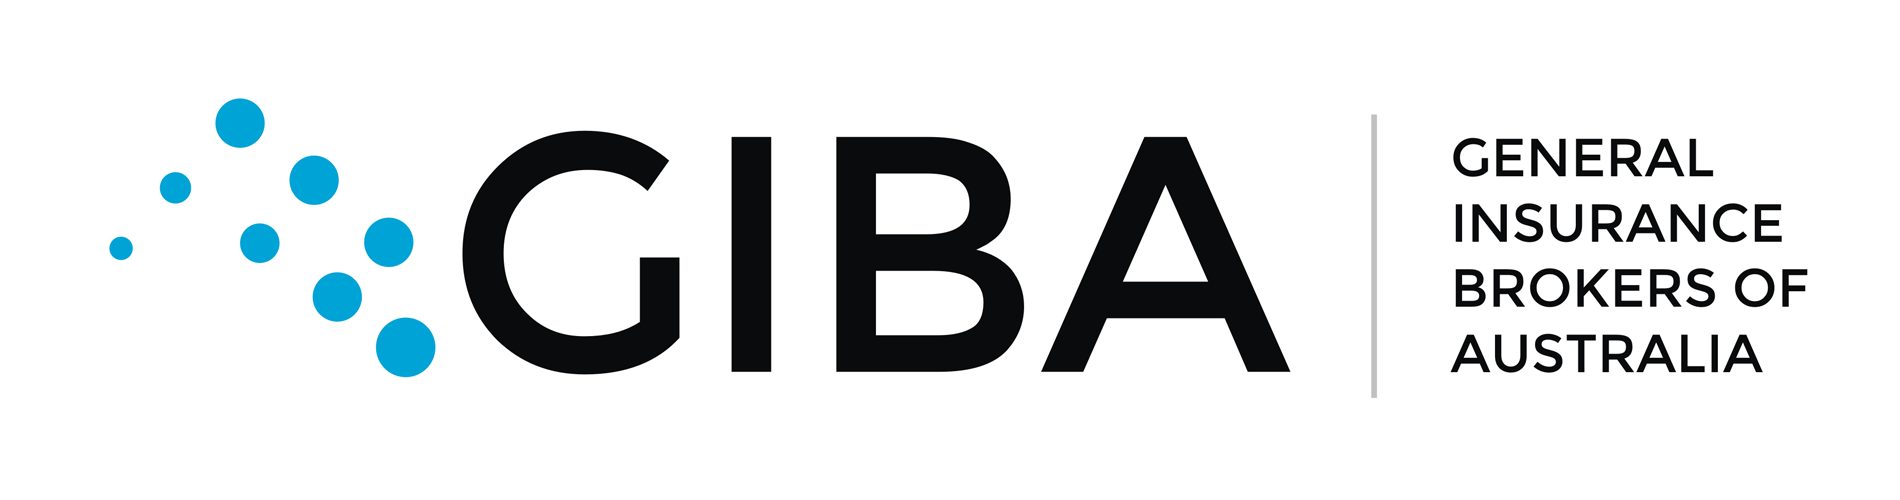 GIBA Standard Logo - cropped.png